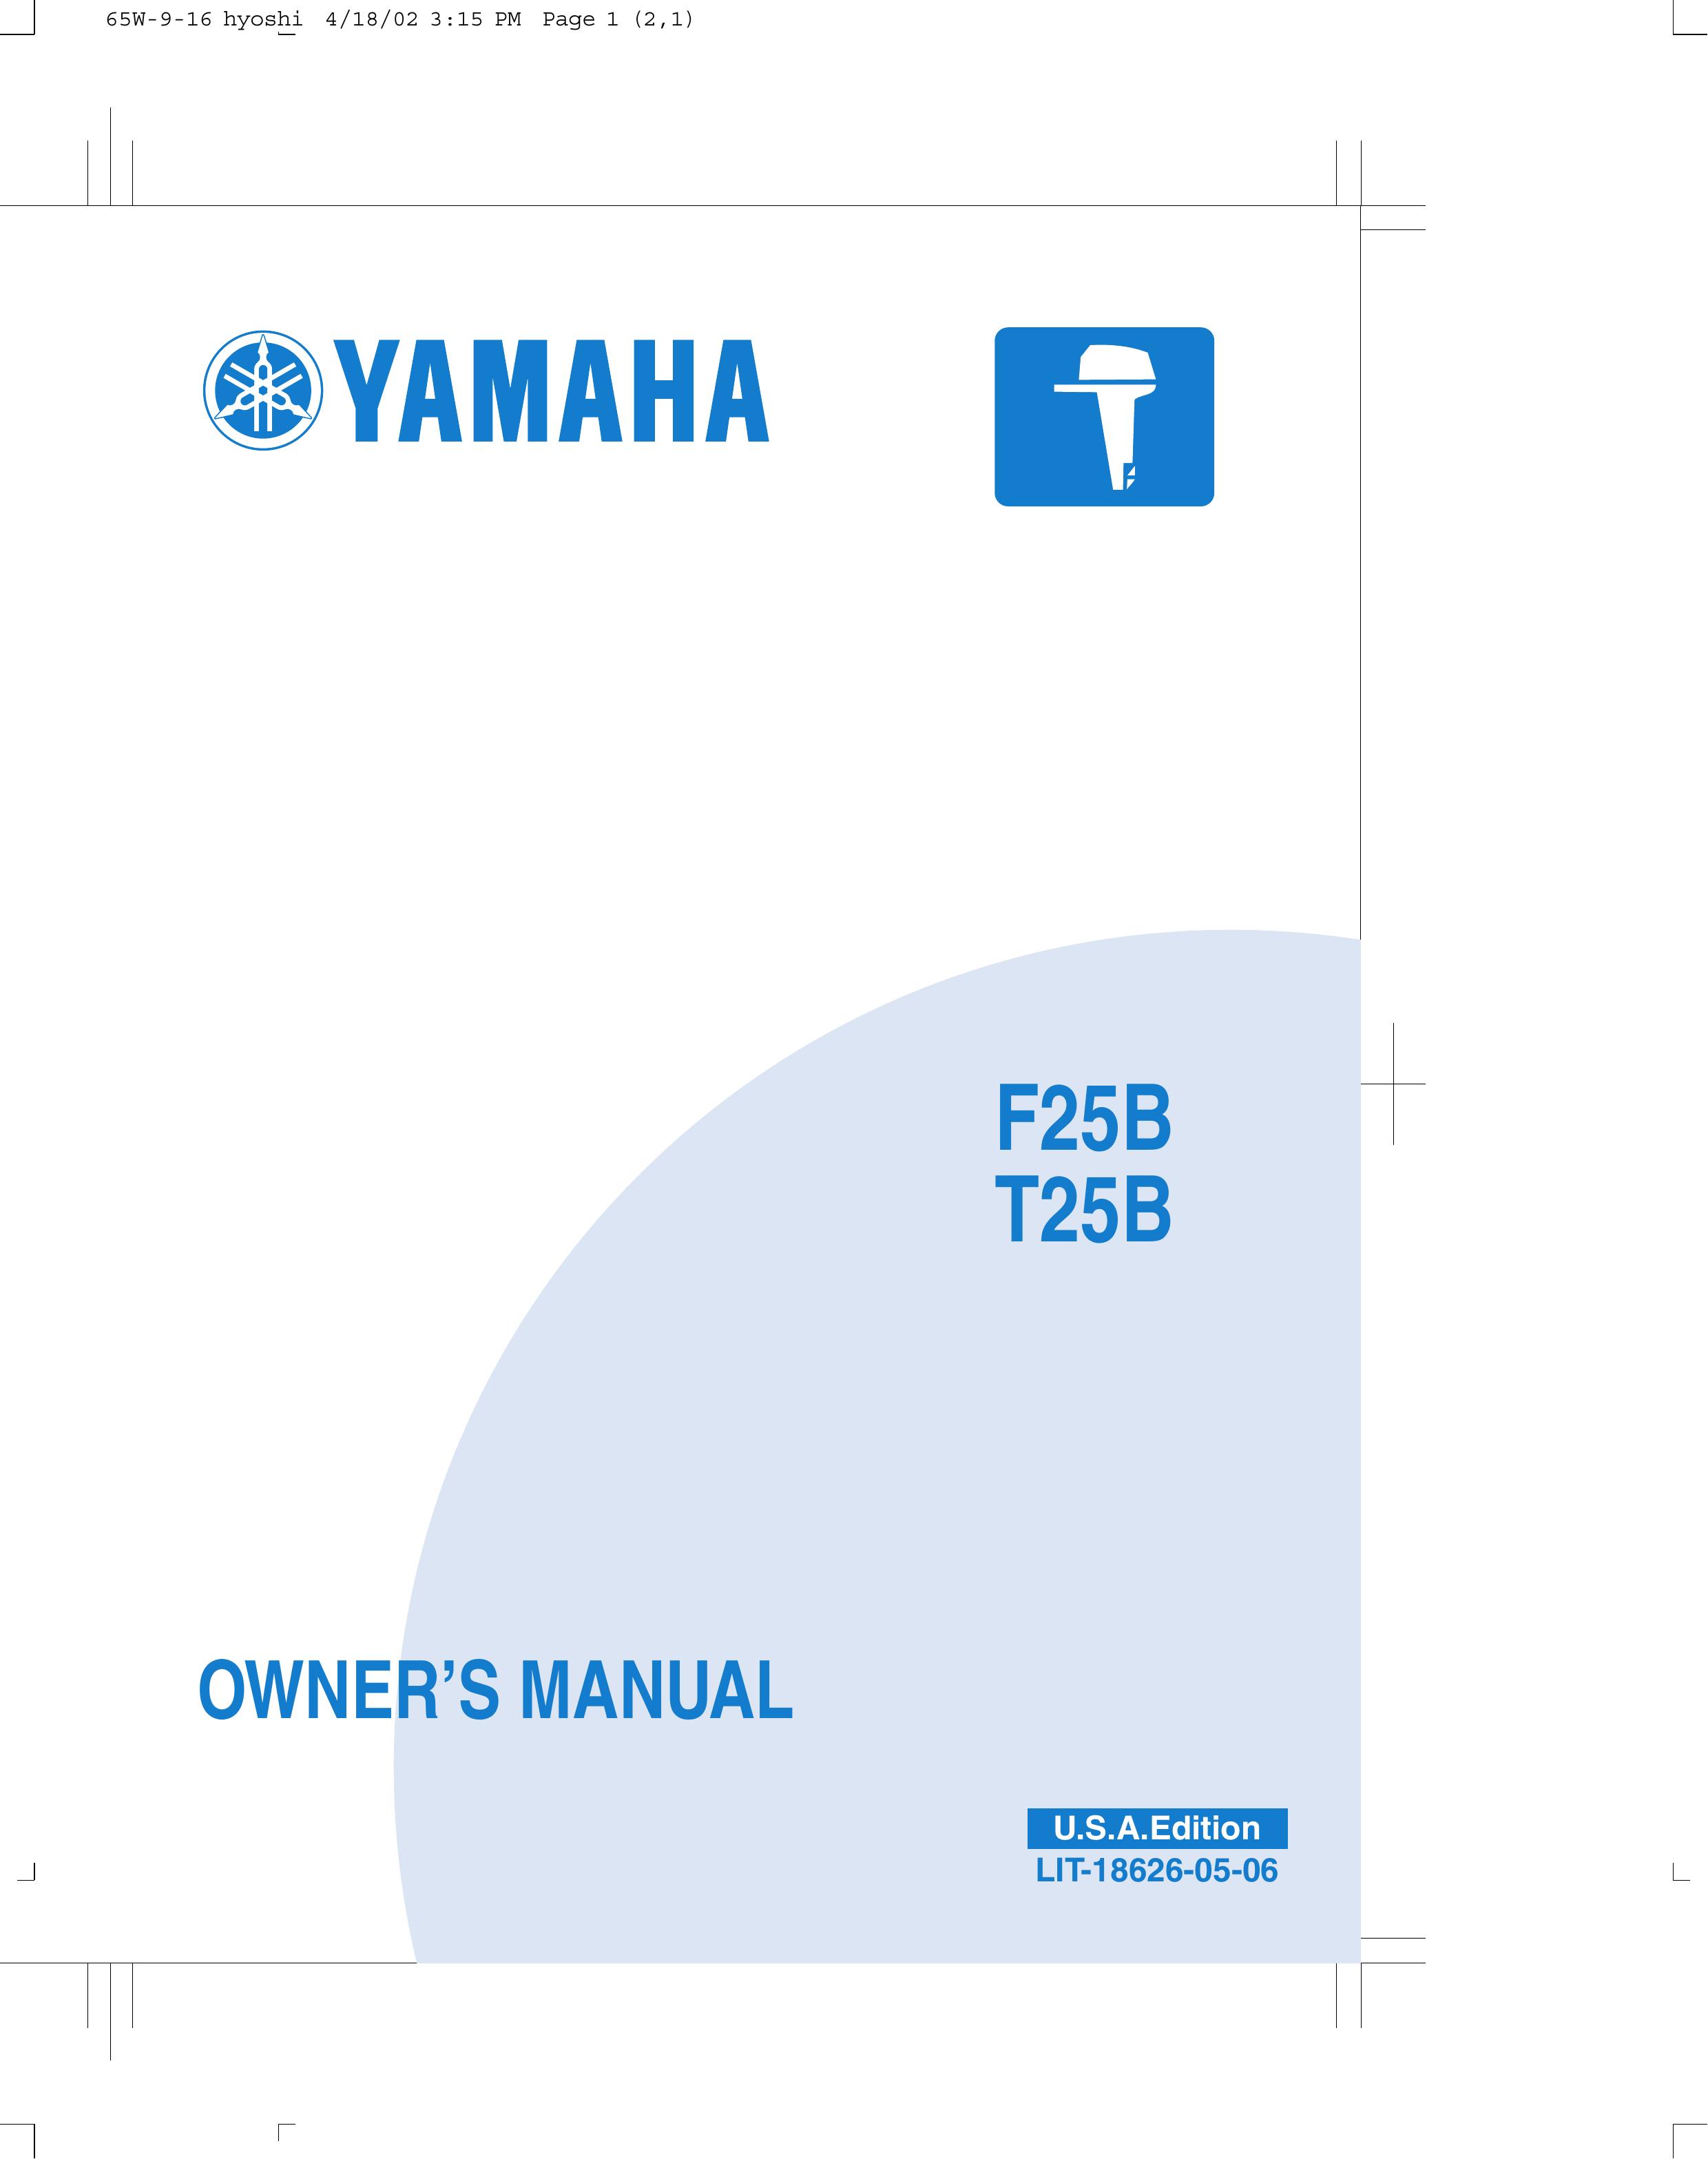 Yamaha T25B Boating Equipment User Manual